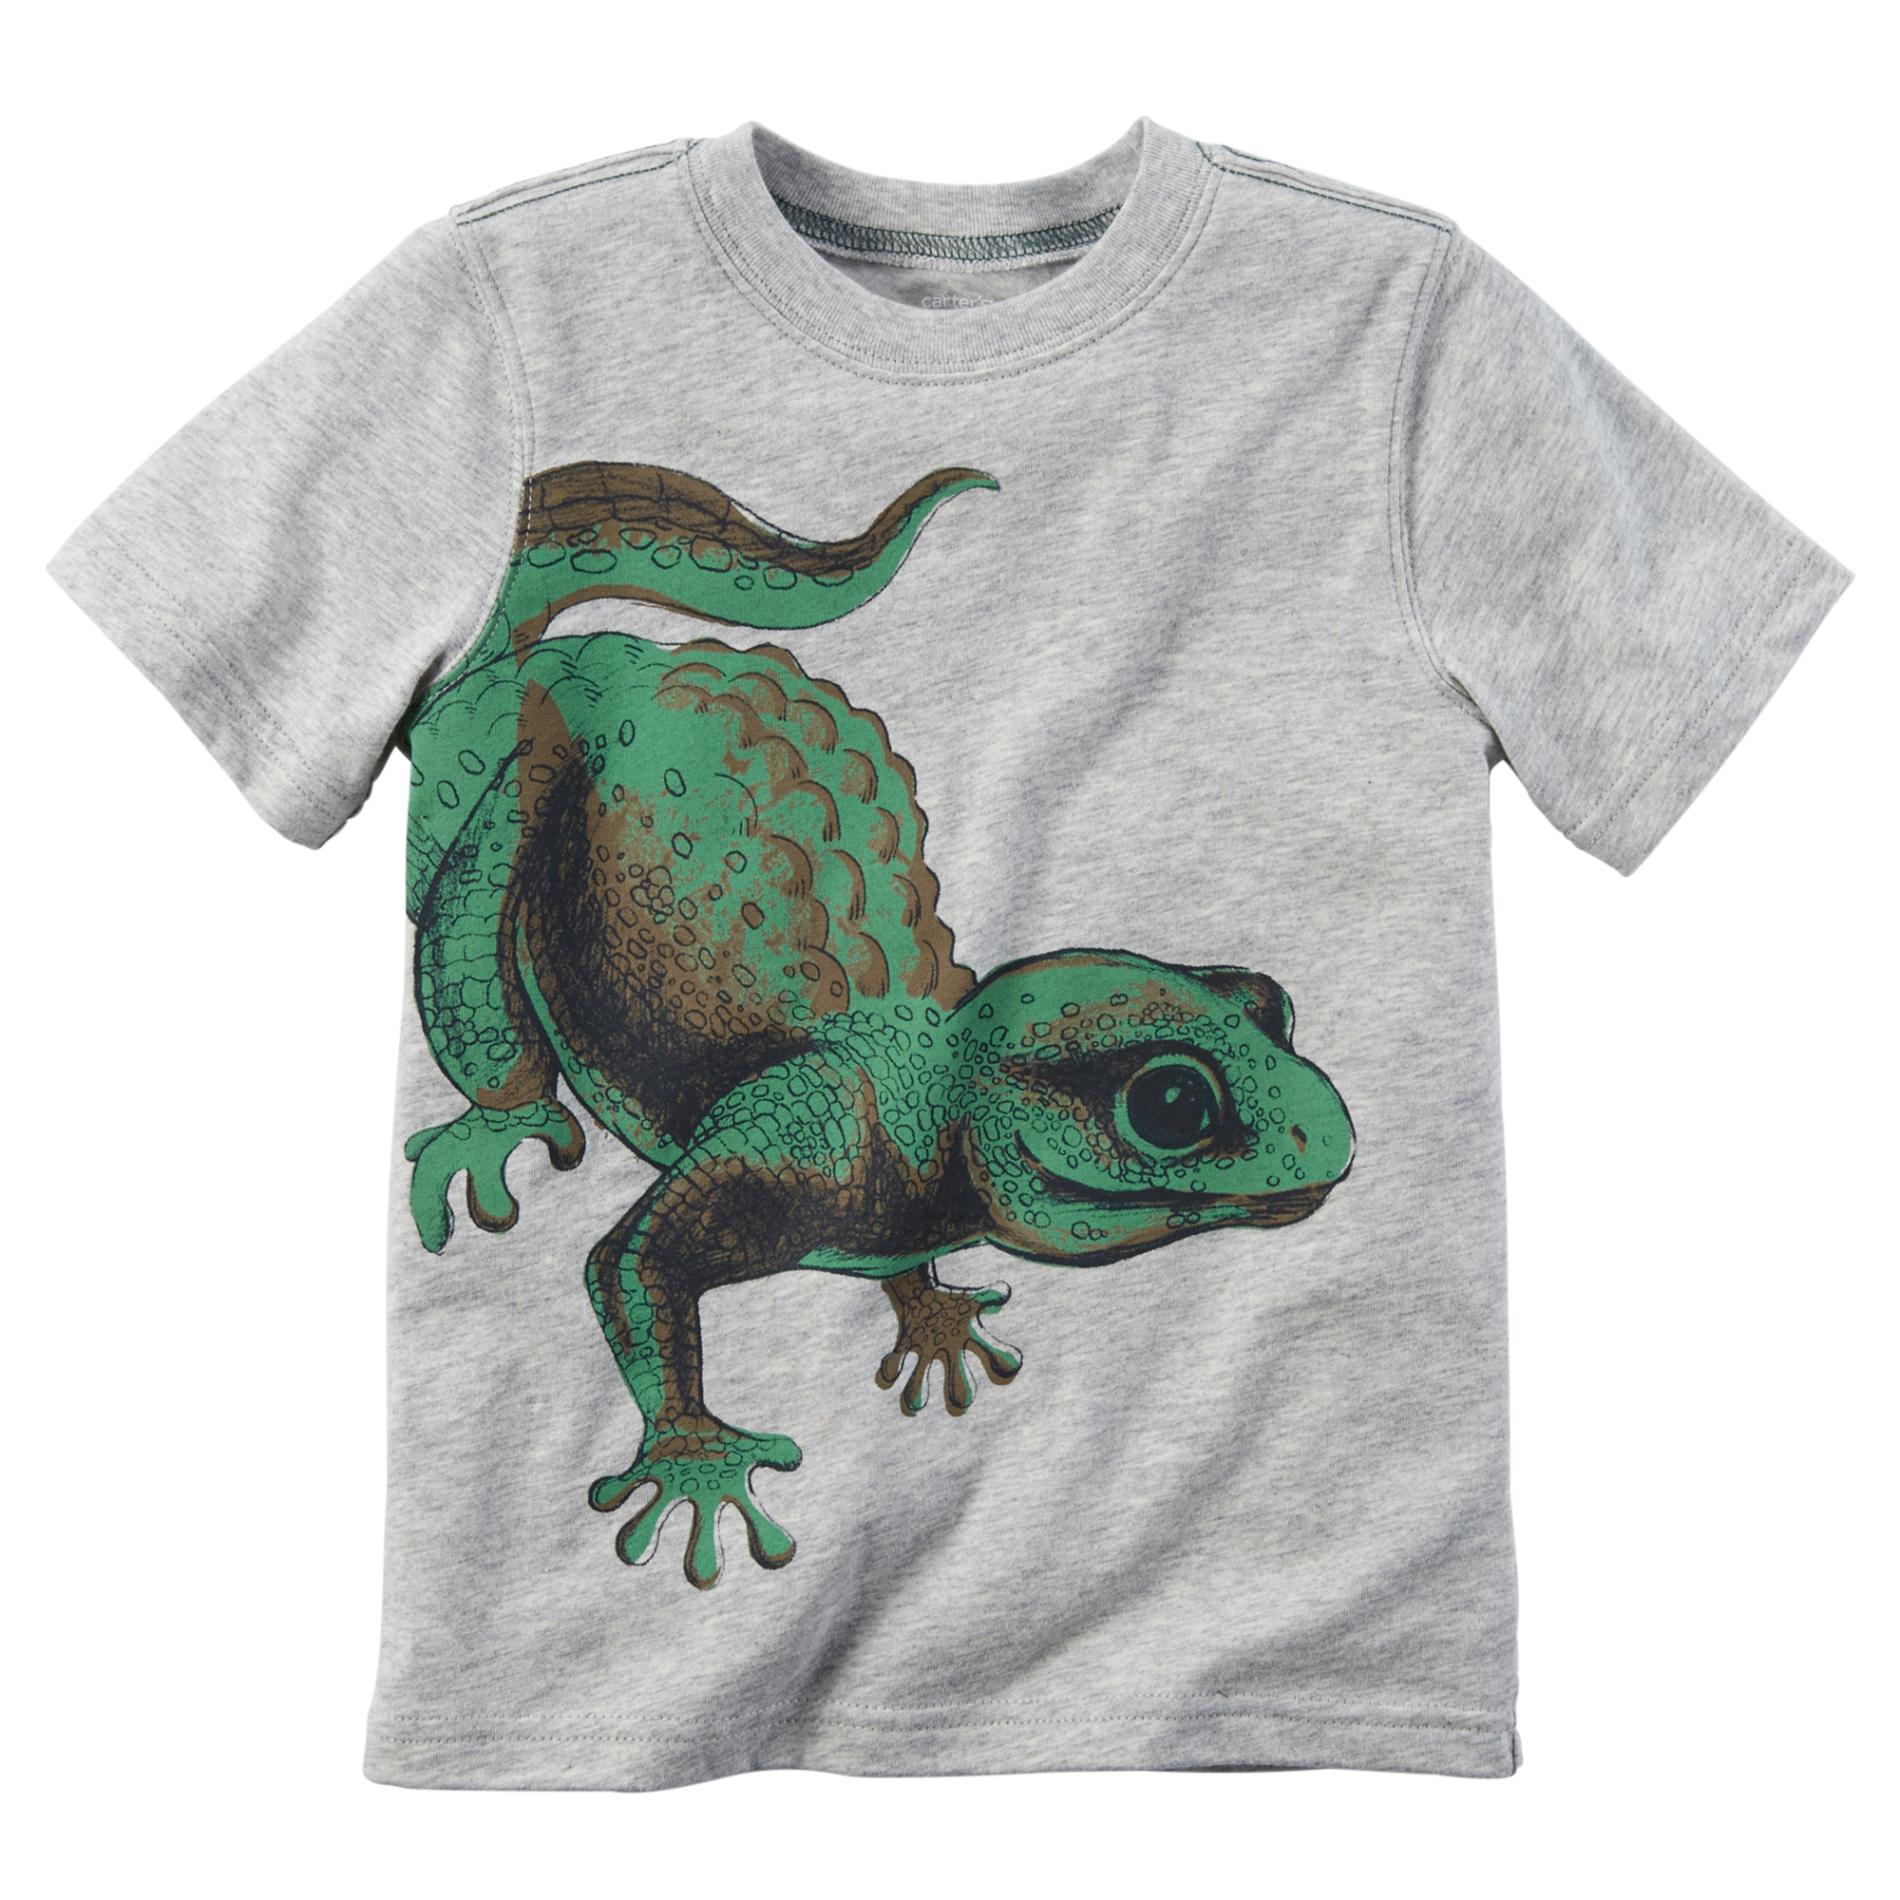 Boy's Graphic T-Shirt - Lizard